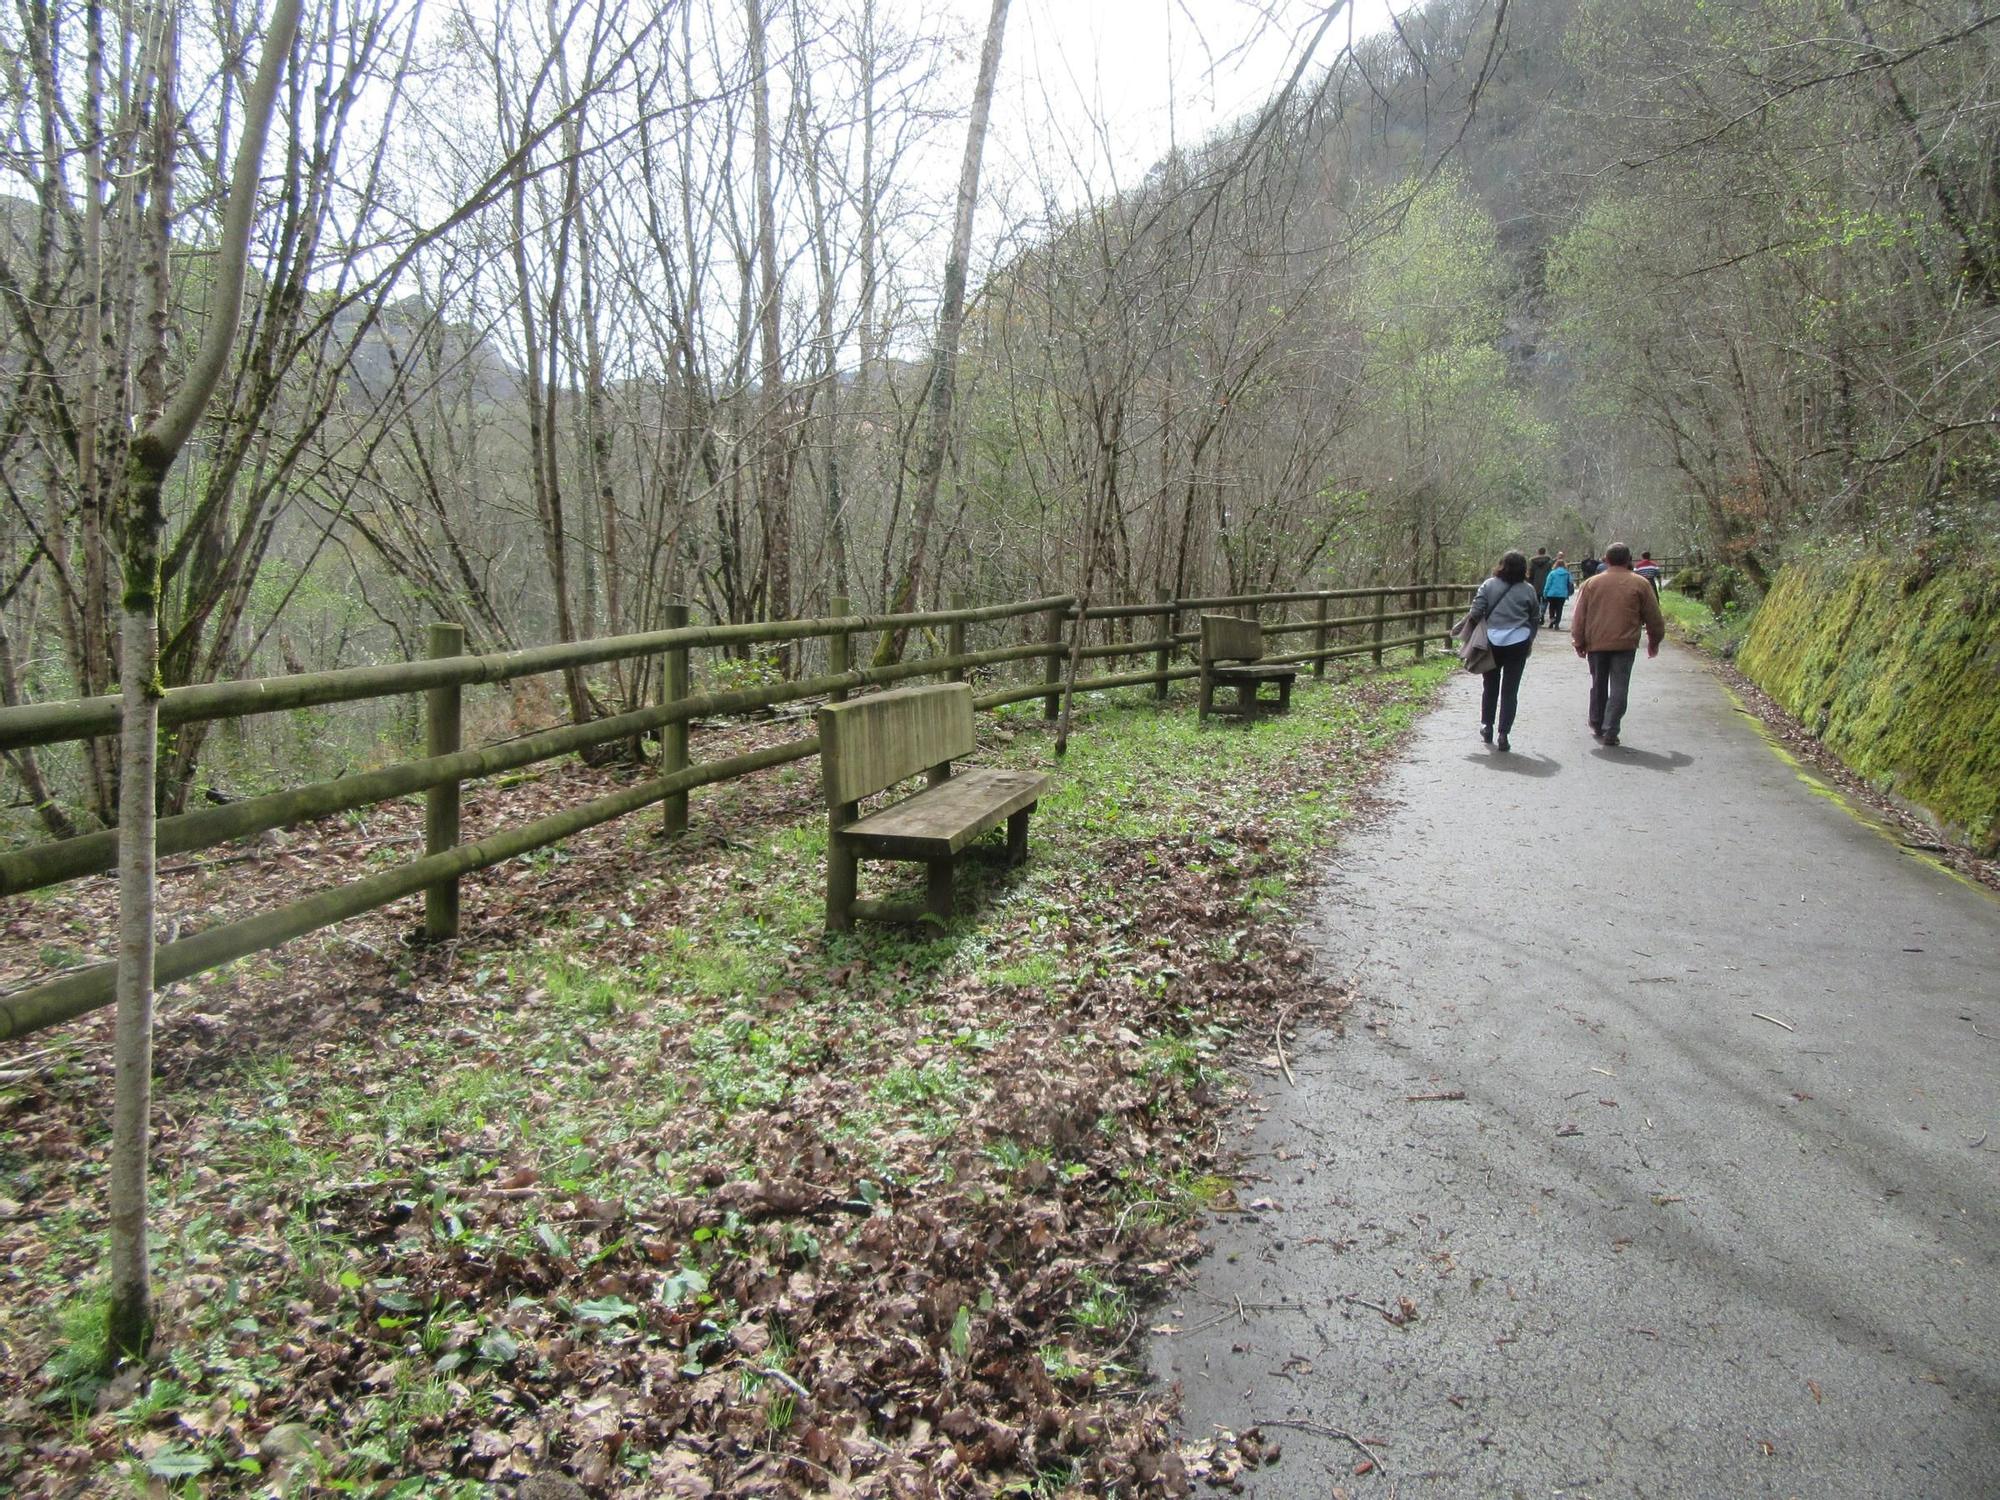 La senda de Muñigu a Covadonga, muy deteriorada